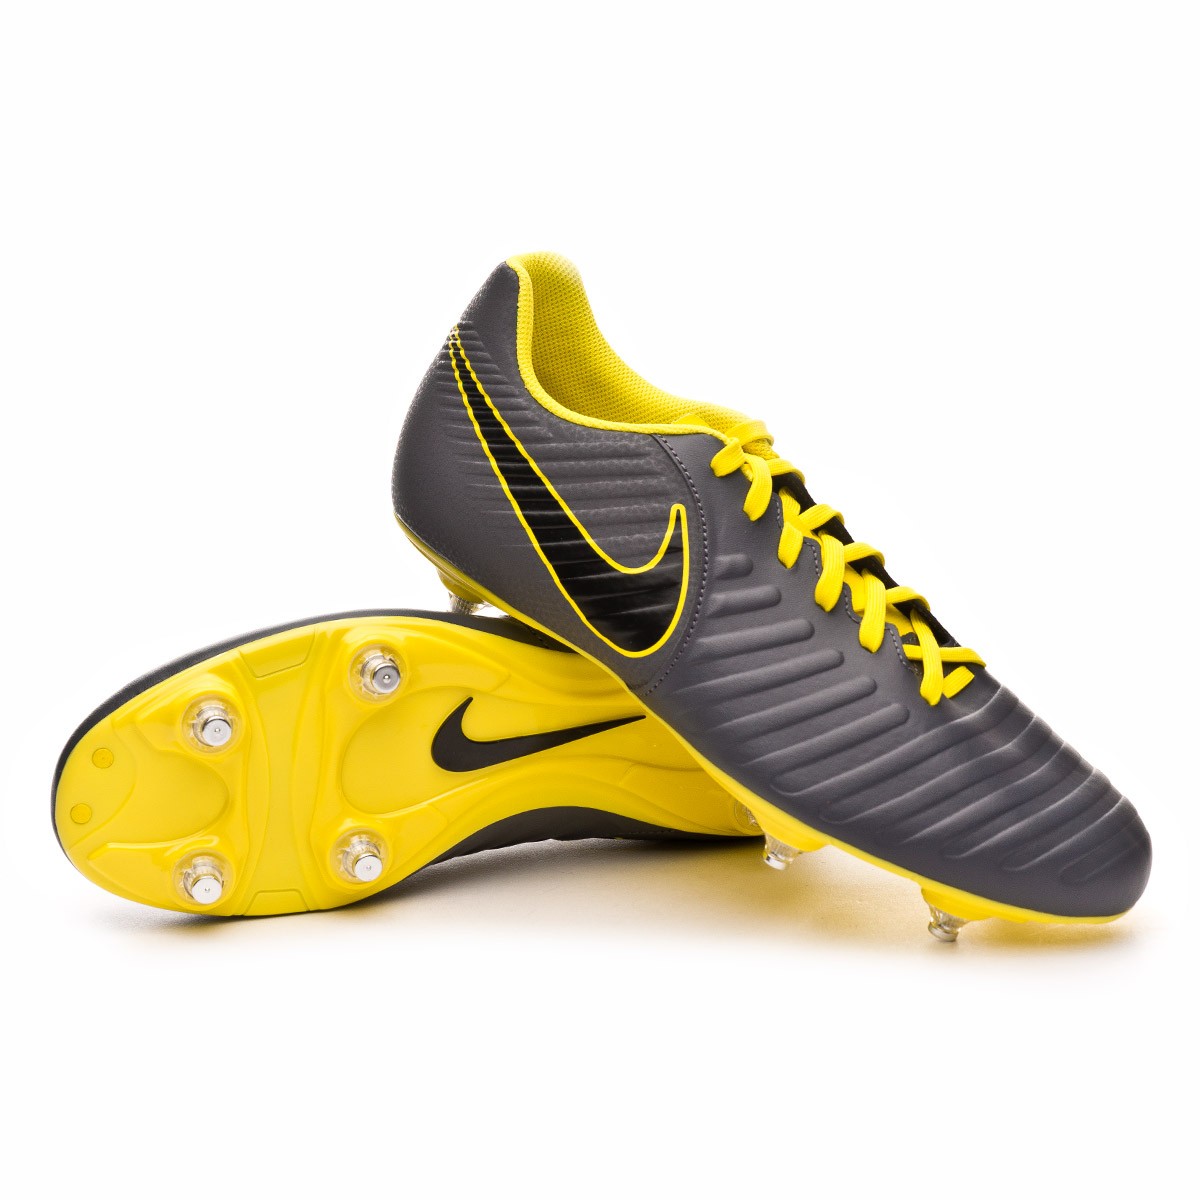 Bota de fútbol Nike Tiempo Legend VII Club SG Dark grey-Black-Optical  yellow - Tienda de fútbol Fútbol Emotion